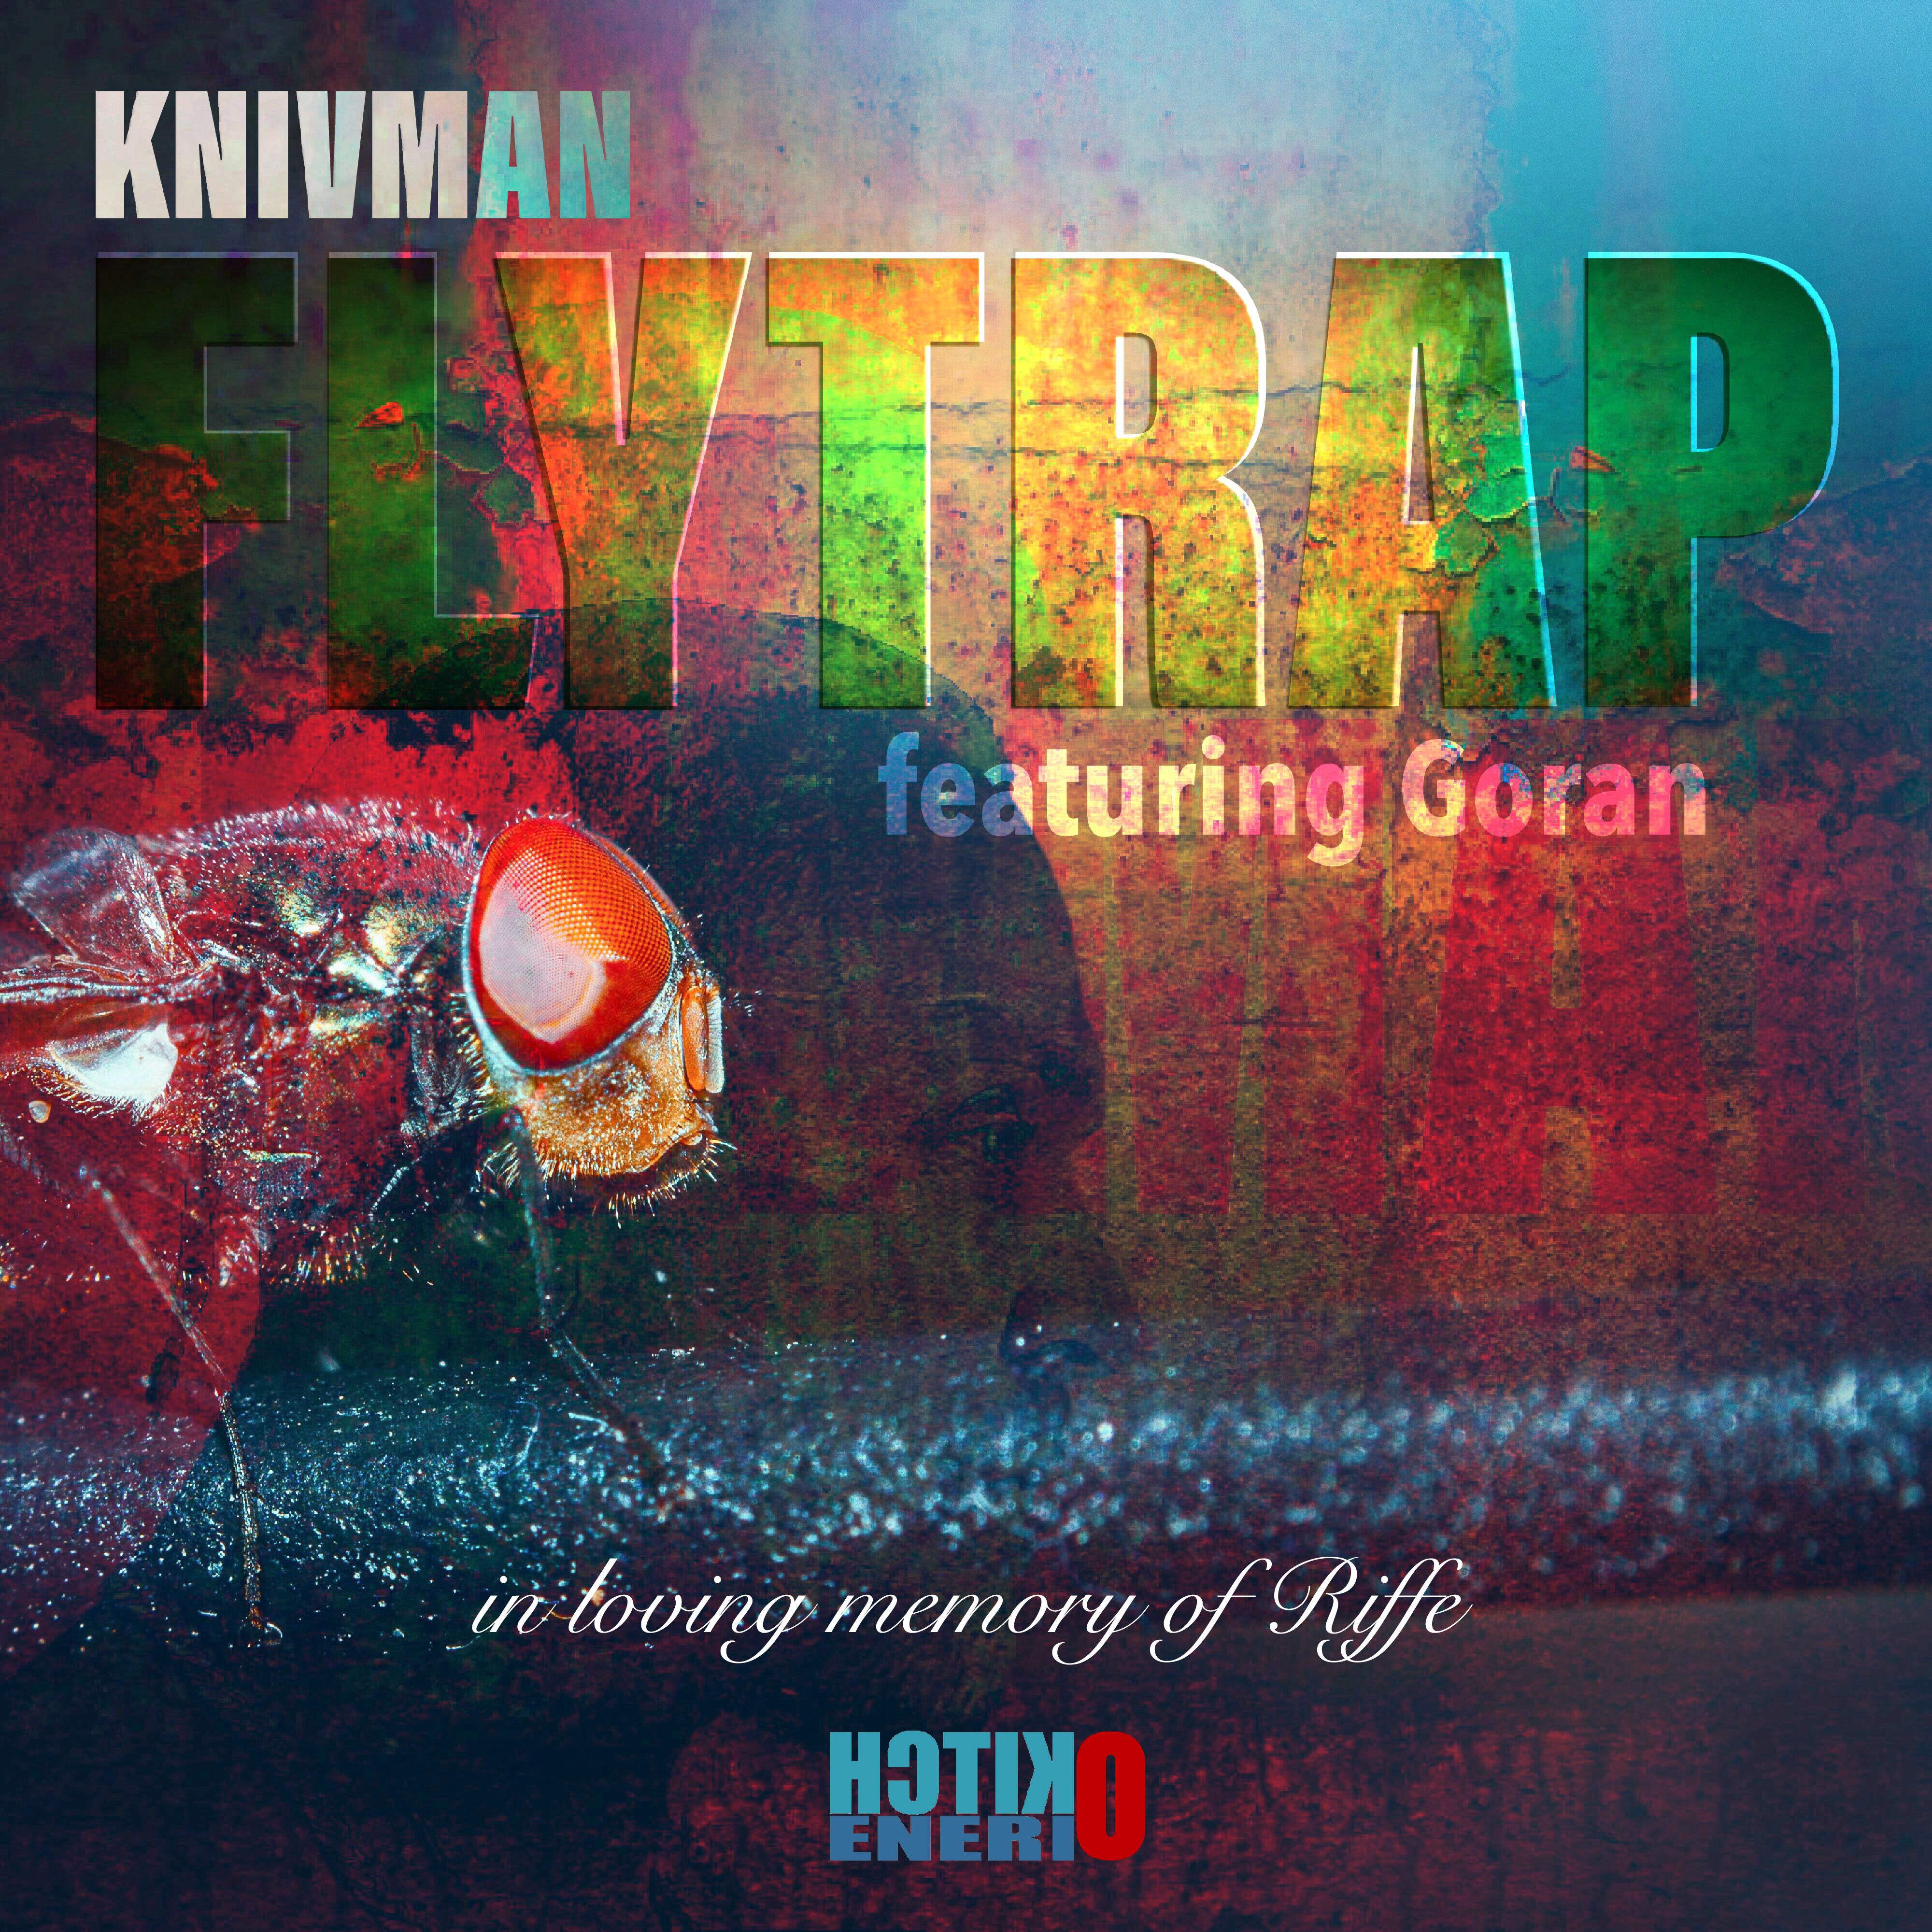 Knivman - Flytrap (feat. Goran)